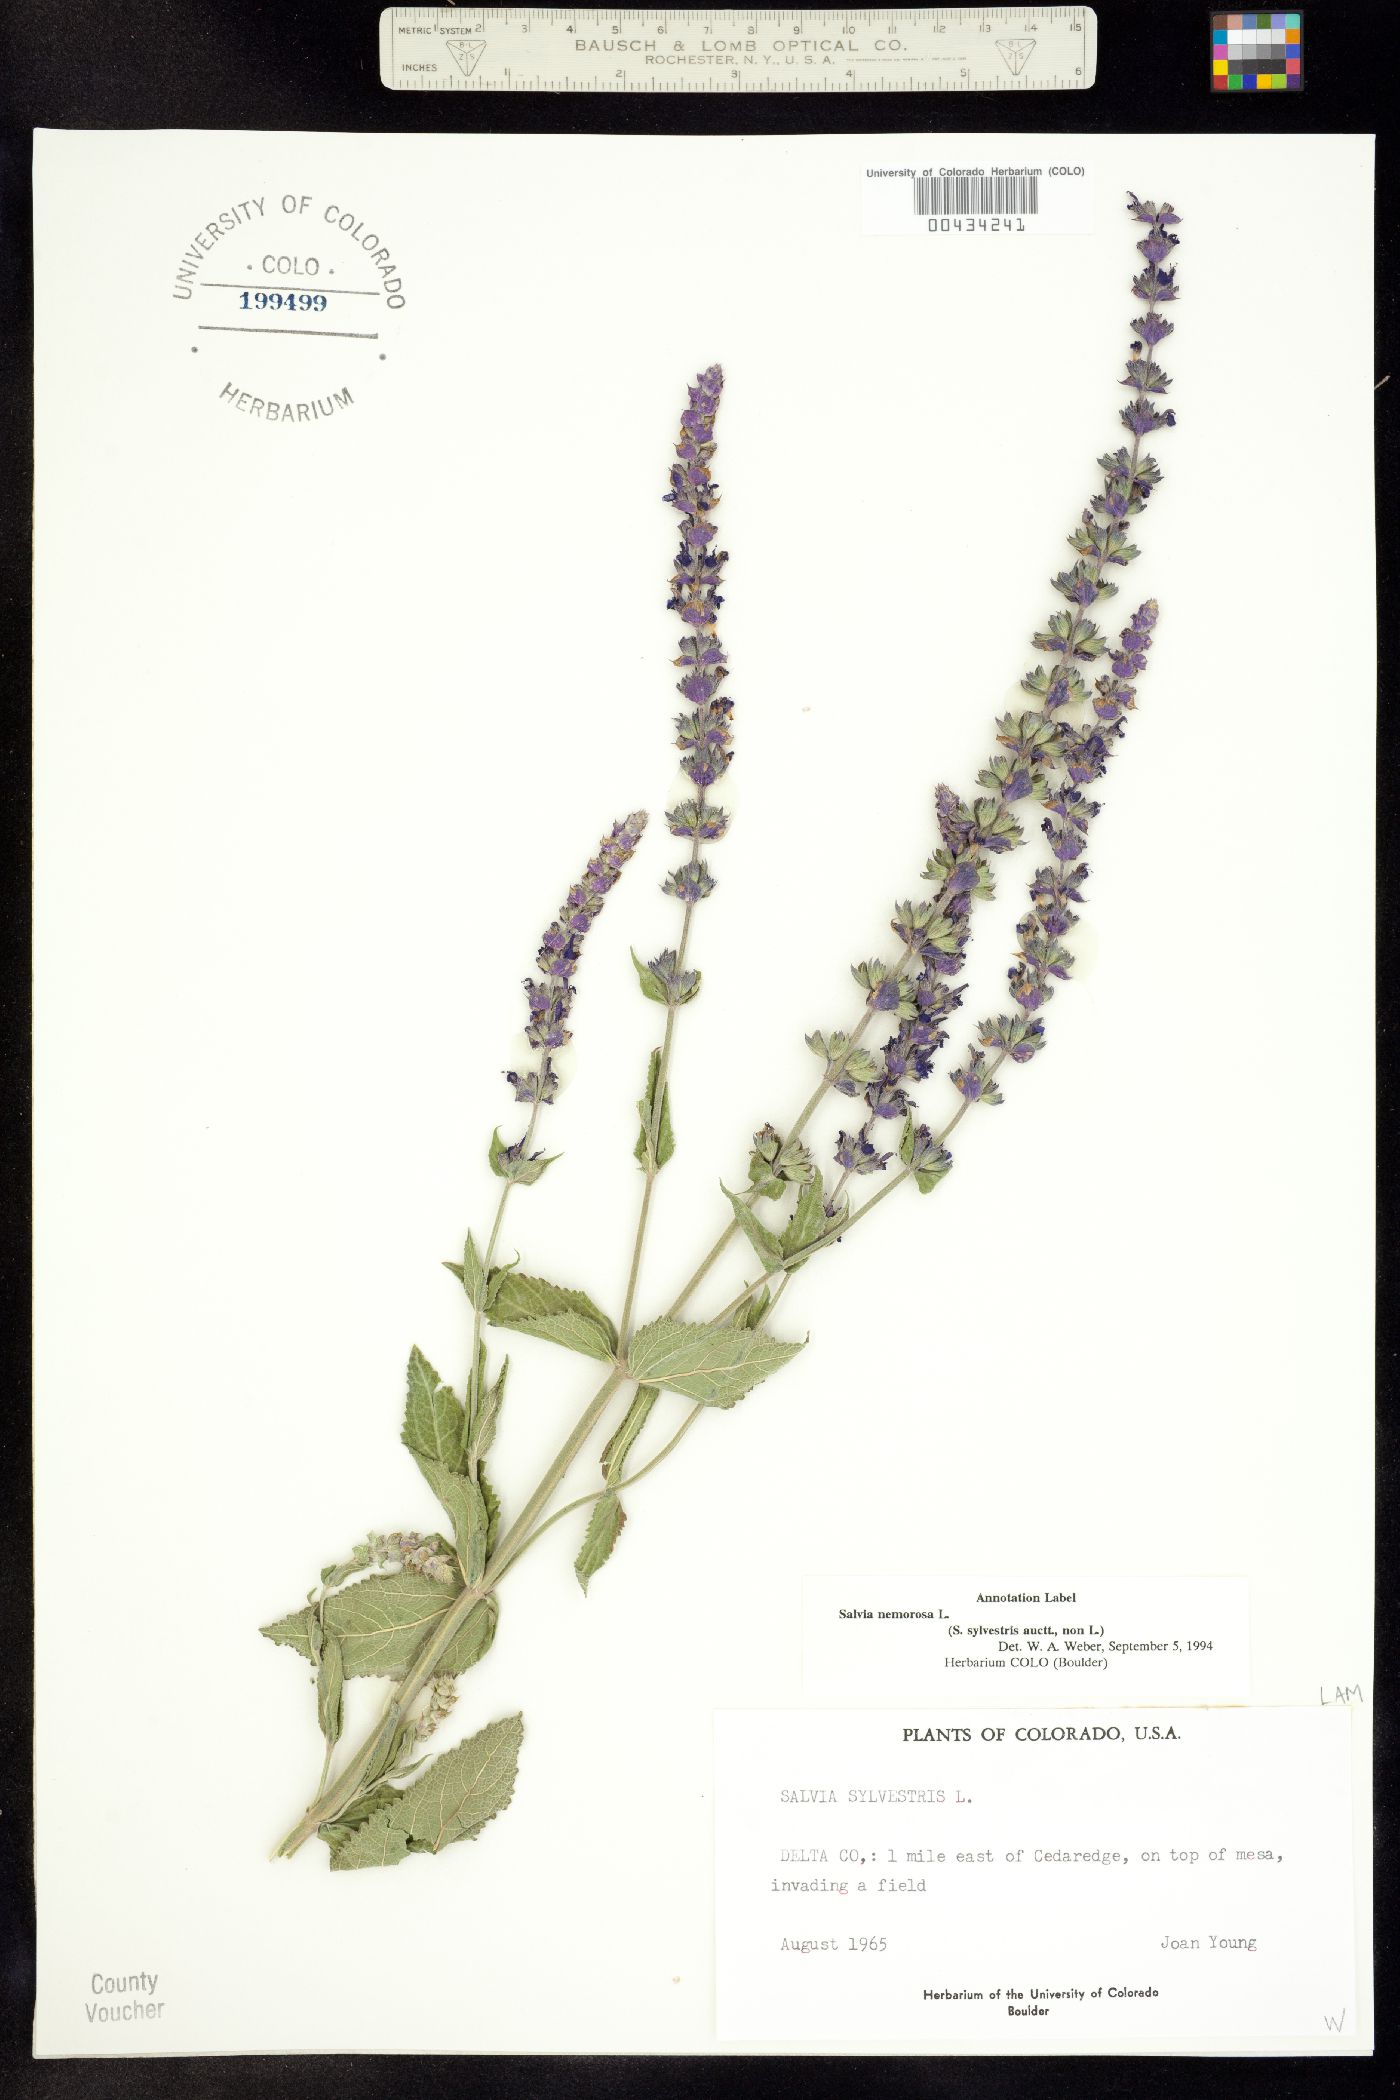 Salvia sylvestris image